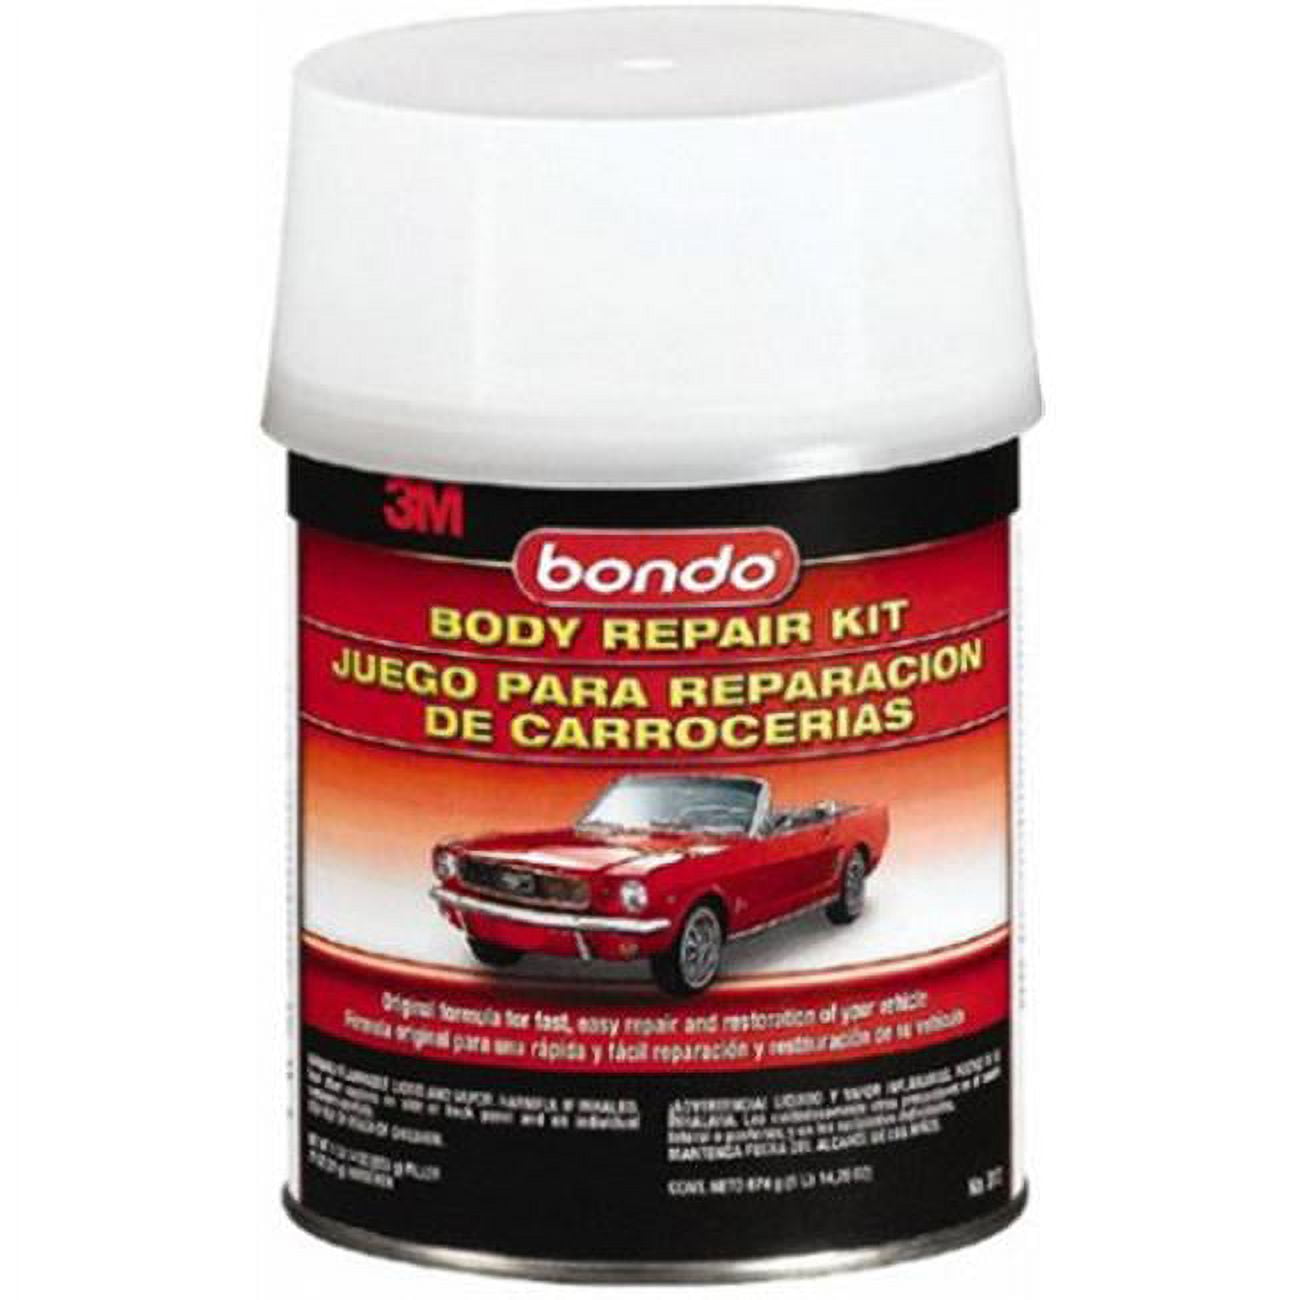  3M Bondo Fiberglass Resin Repair Kit, 00420, 0.45 Pint :  Automotive